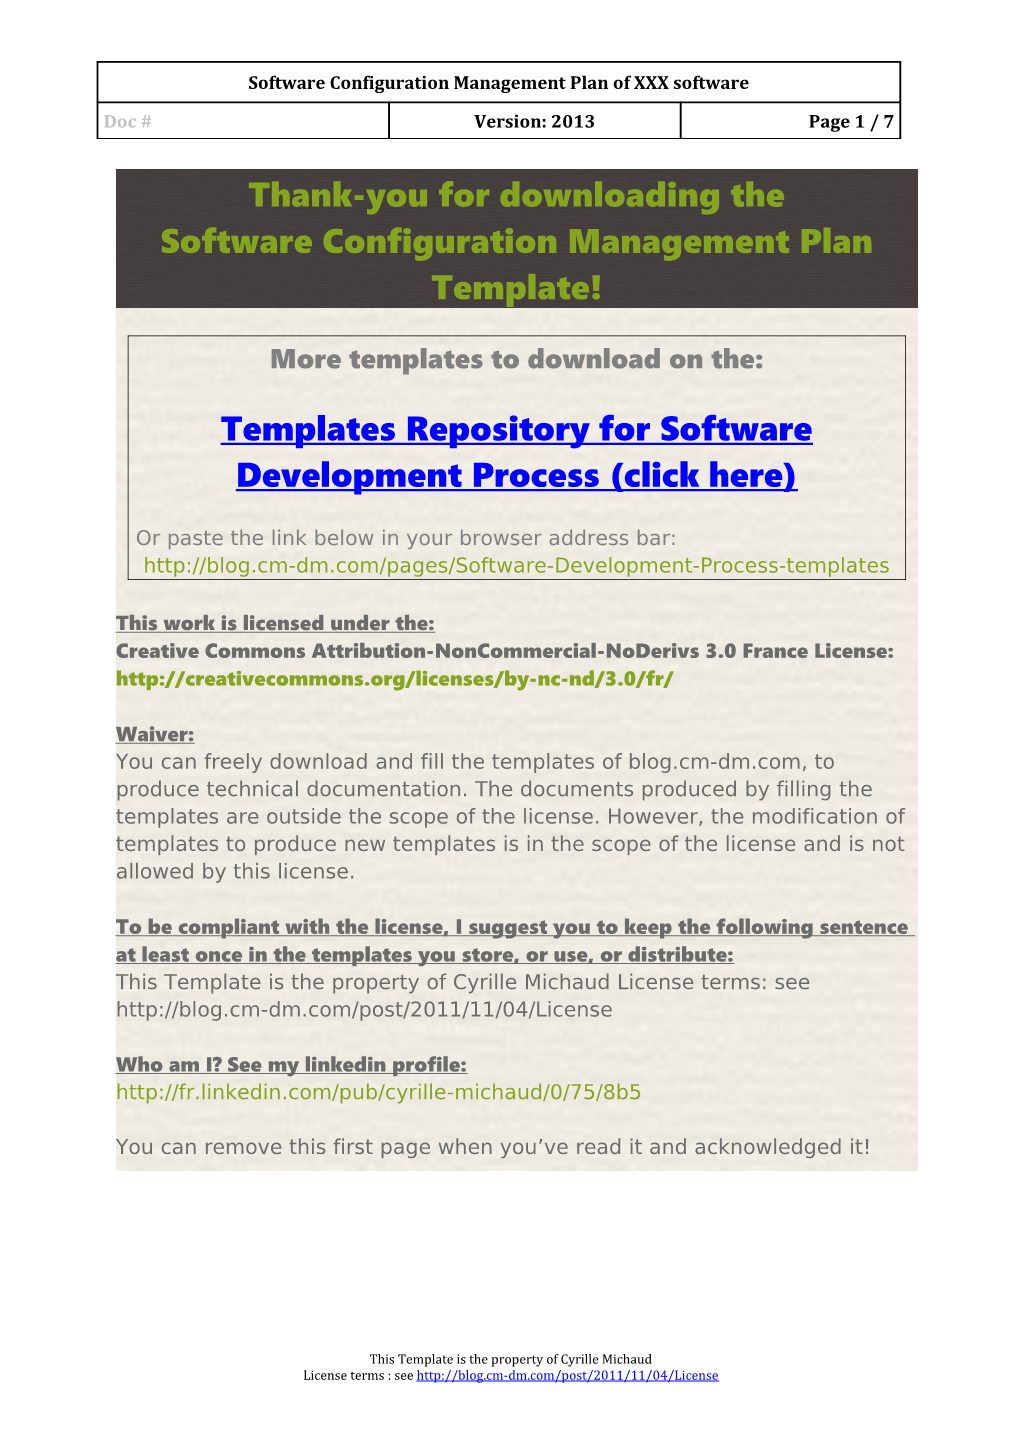 Software Configuration Management Plan Template V2